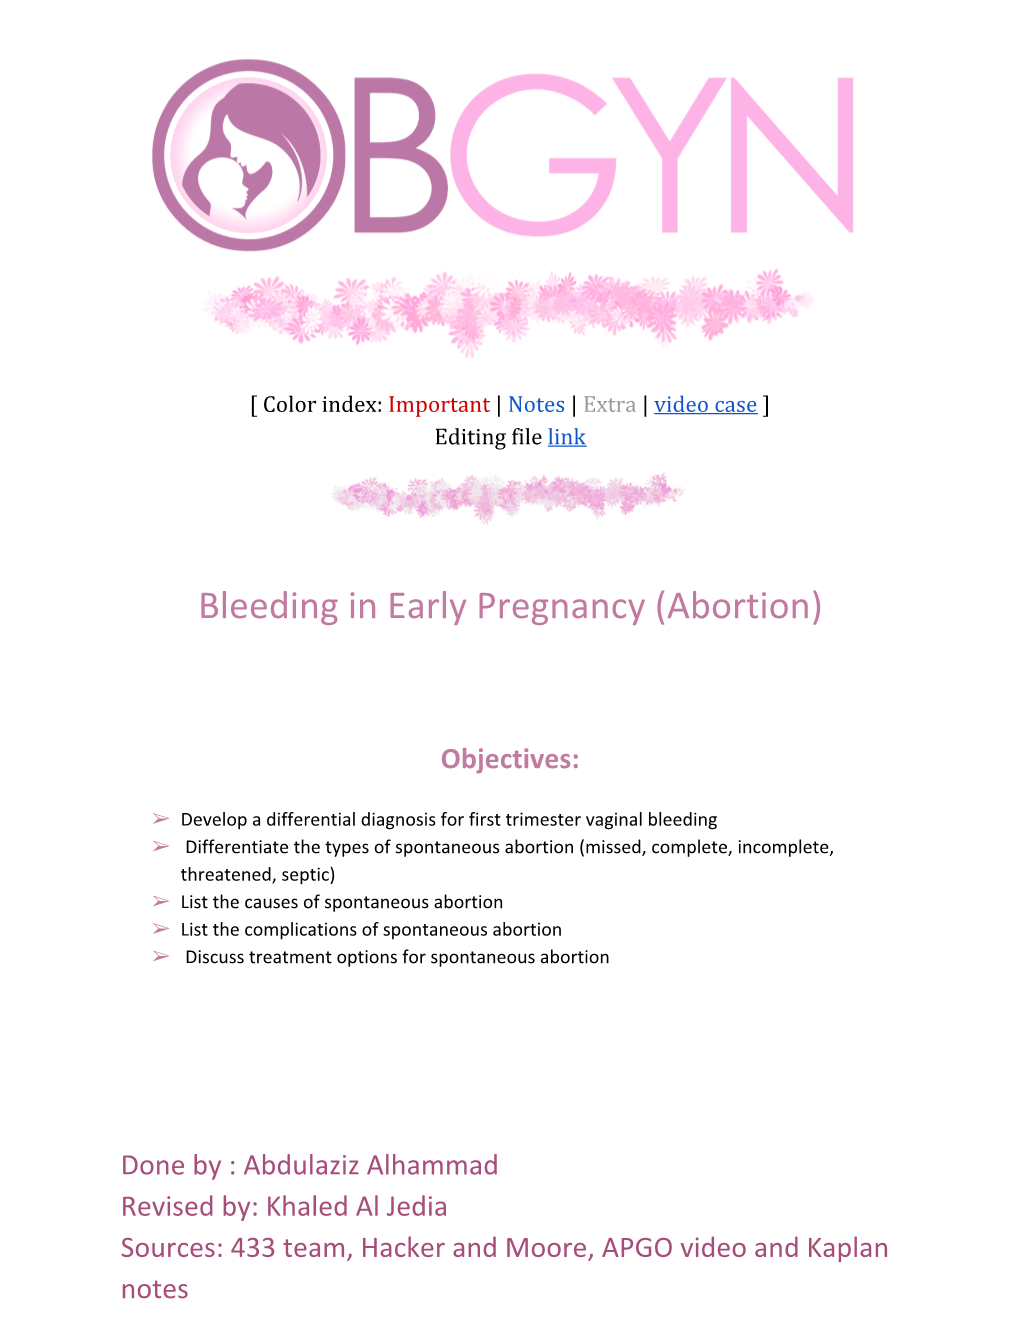 Bleeding in Early Pregnancy (Abortion)